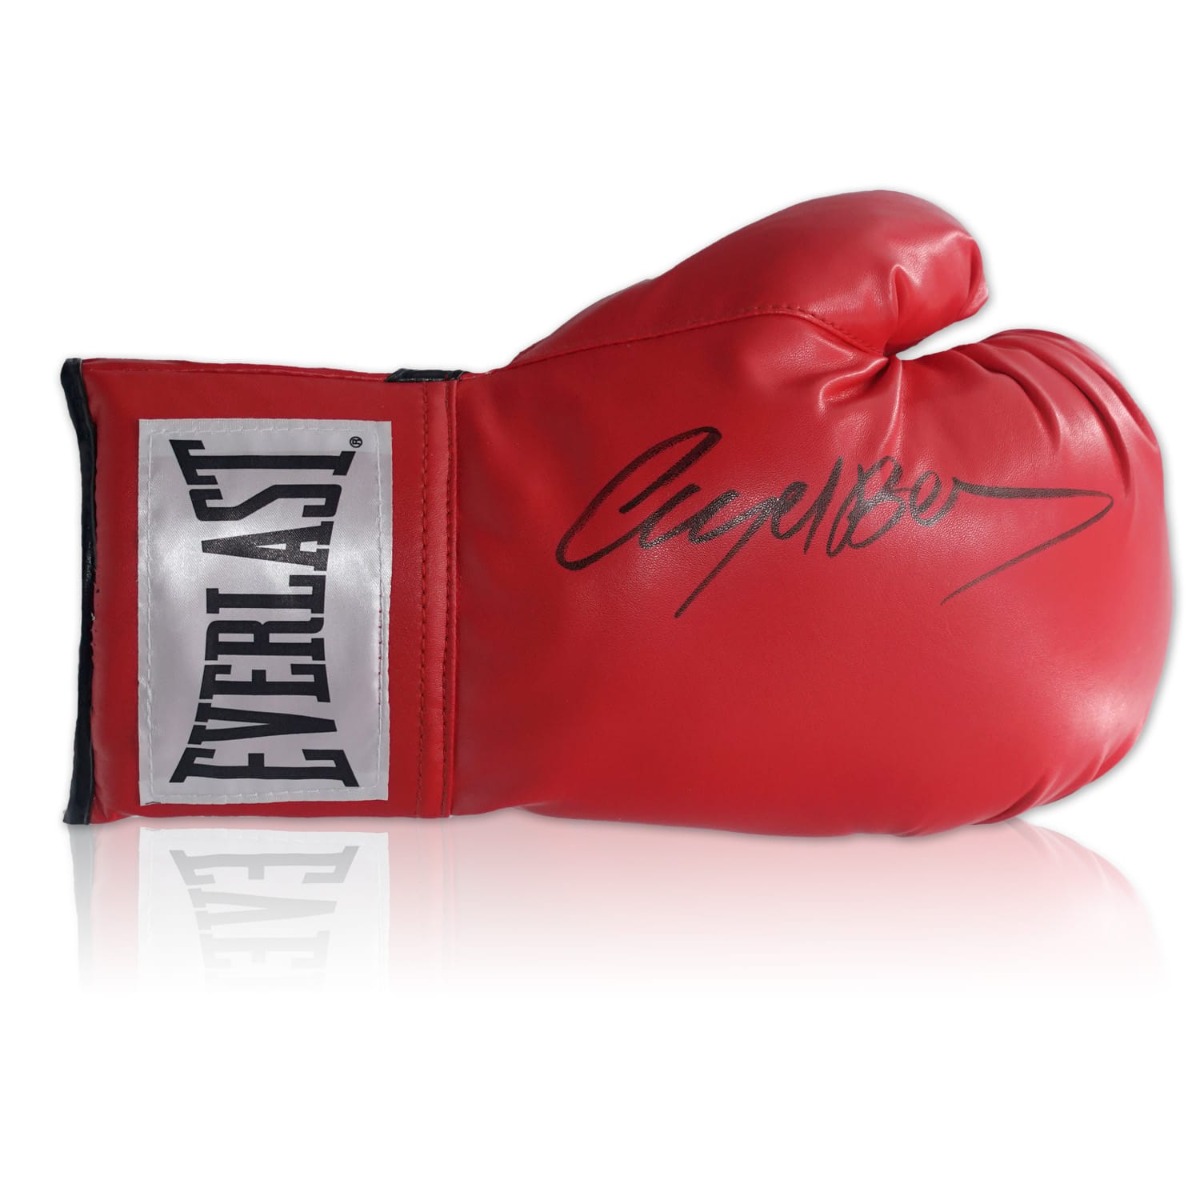 A Nigel Benn Signed Black Boxing Glove Presented In A Dome Frame 